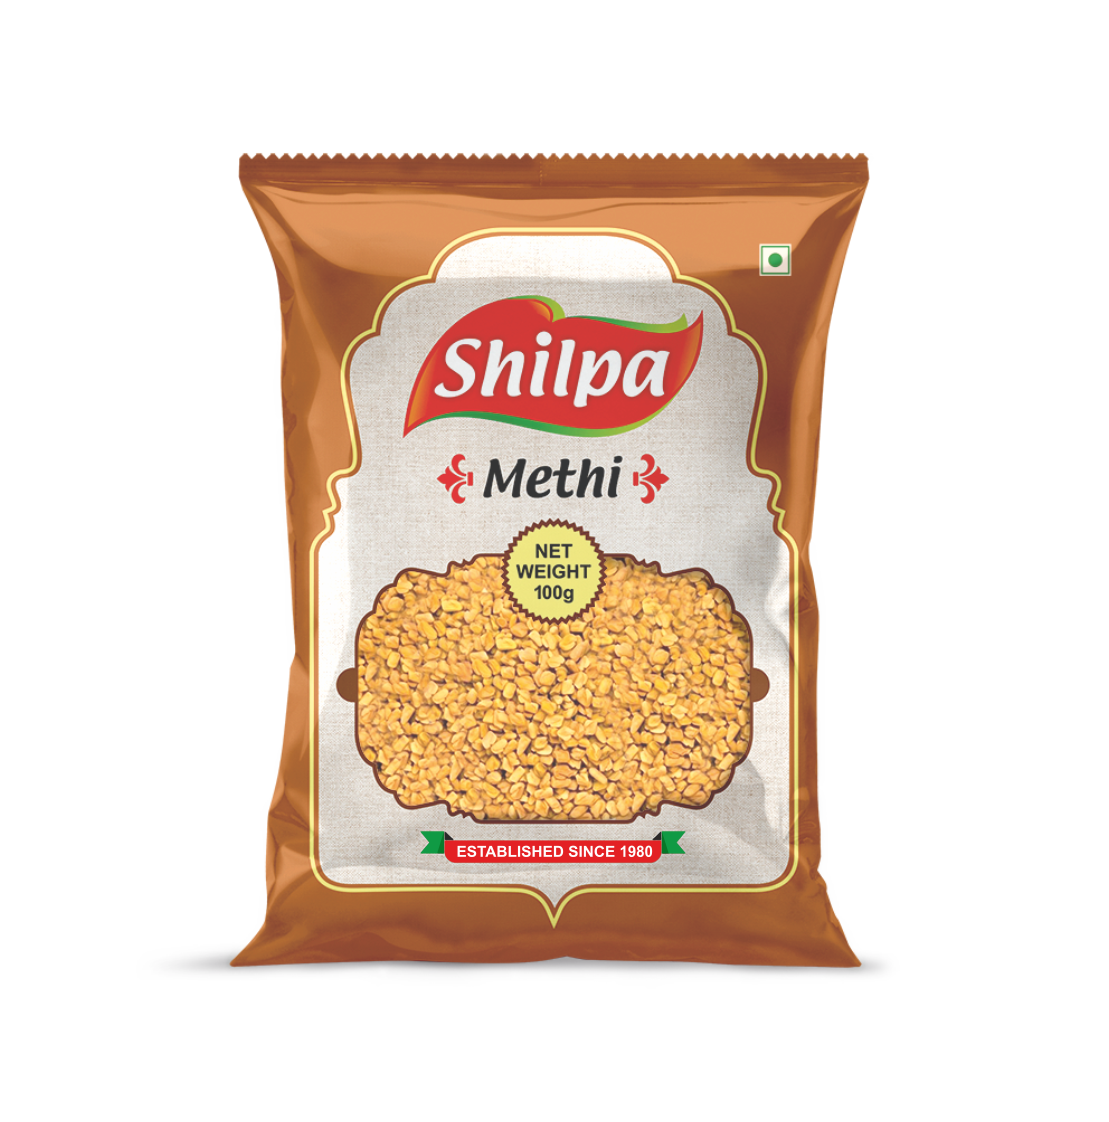 Shilpa Whole Methi (Fenugreek) Seeds 100g Pouch